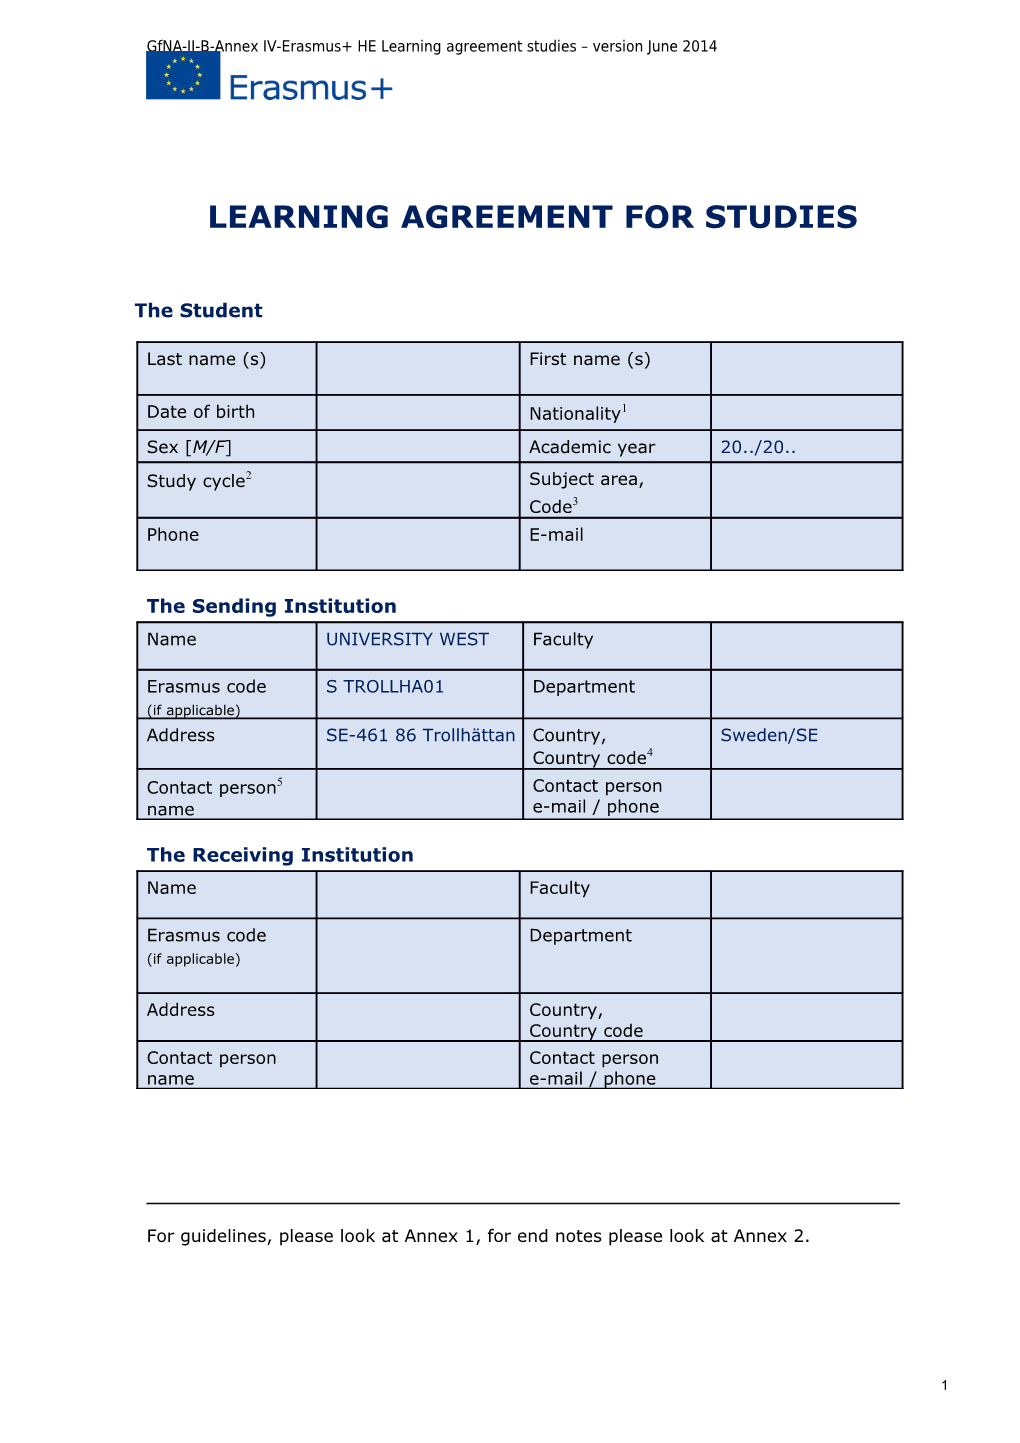 Gfna-II-B-Annex IV-Erasmus+ HE Learning Agreement Studies Version June2014